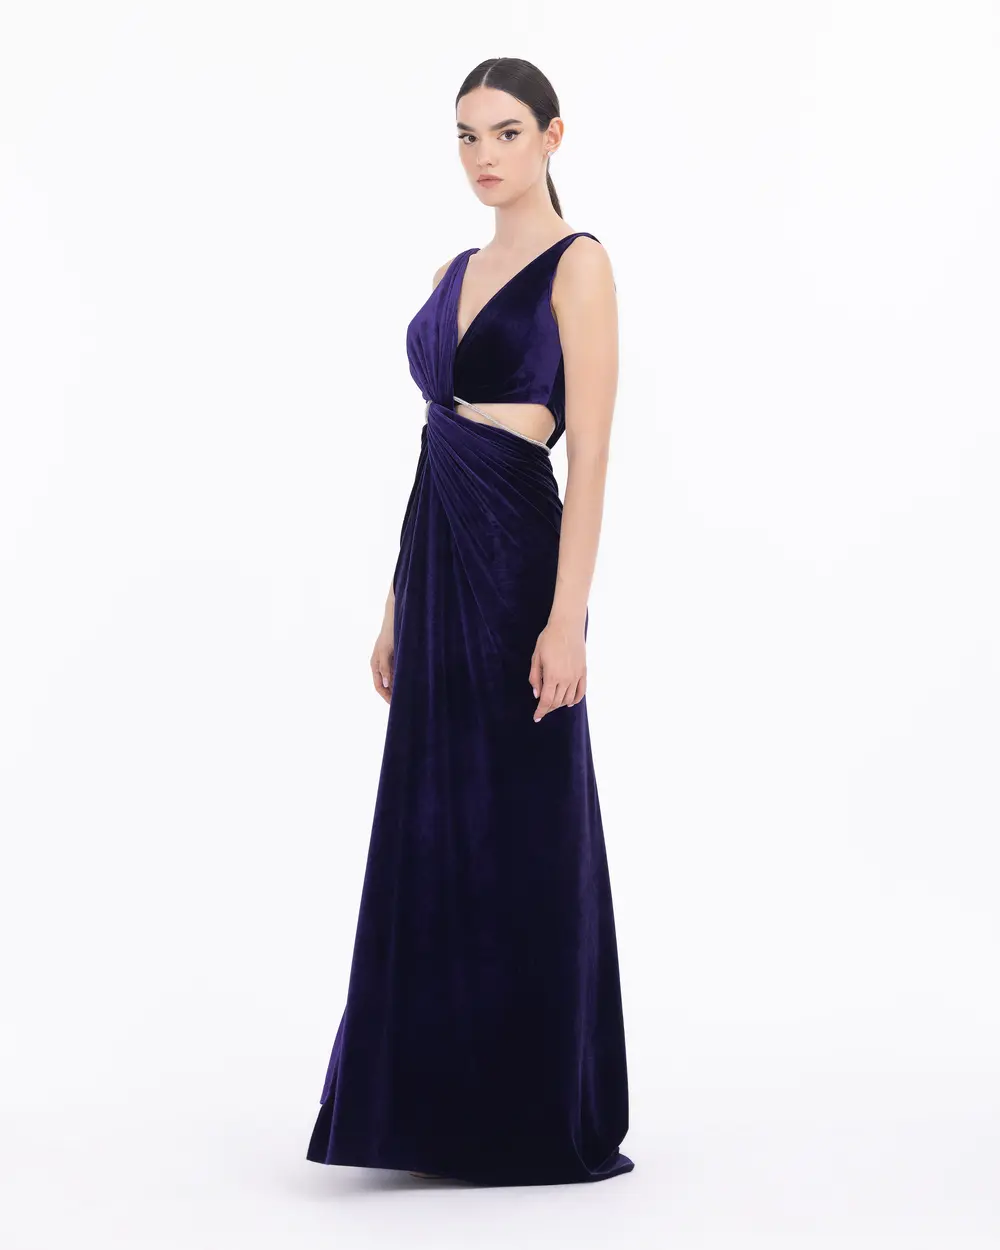 Waist Detailed Accessory Velvet Evening Dress